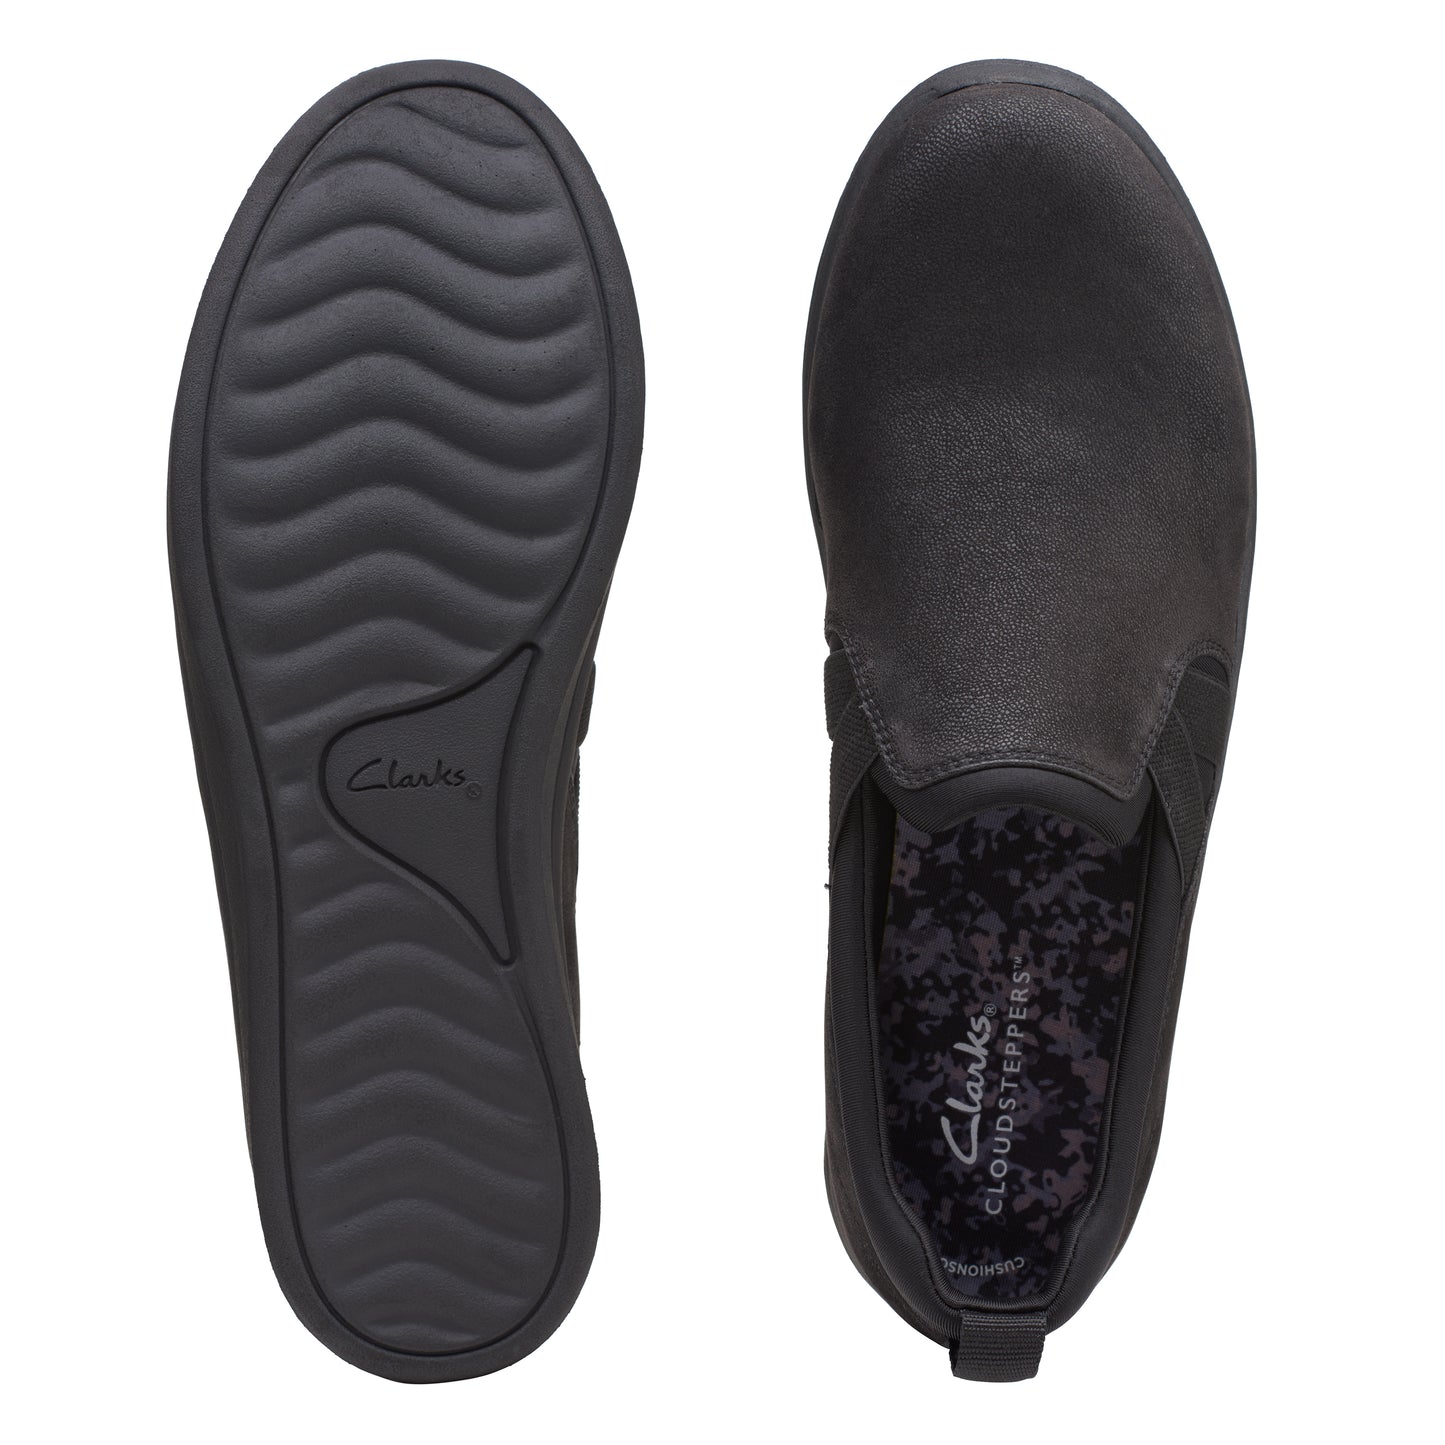 Clarks Women's Breeze Bali - Black Both Bottom of Shoe and top of Shoe Shown